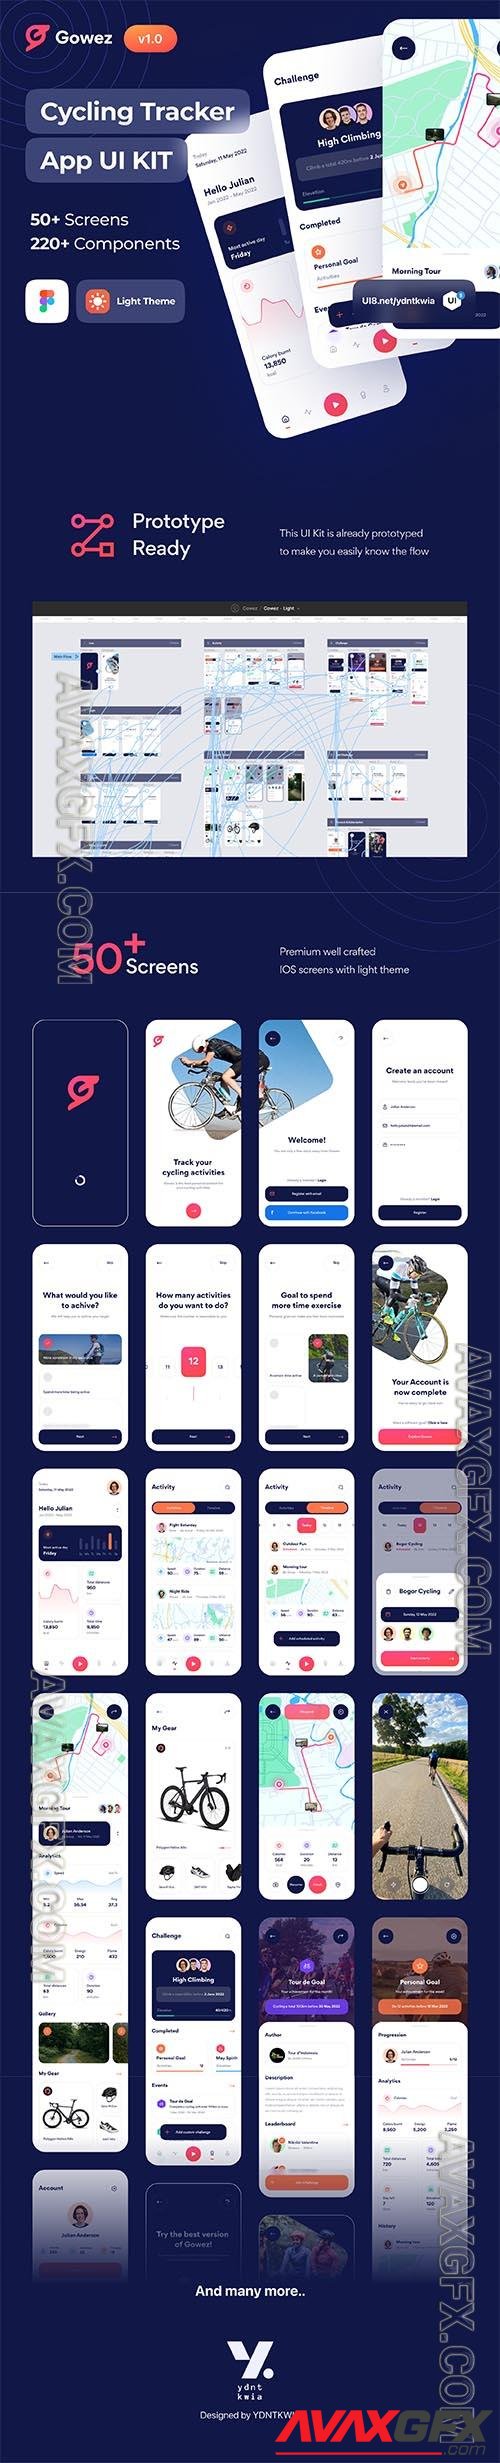 Gowez - Sport Cycling Tracker App UI Kit